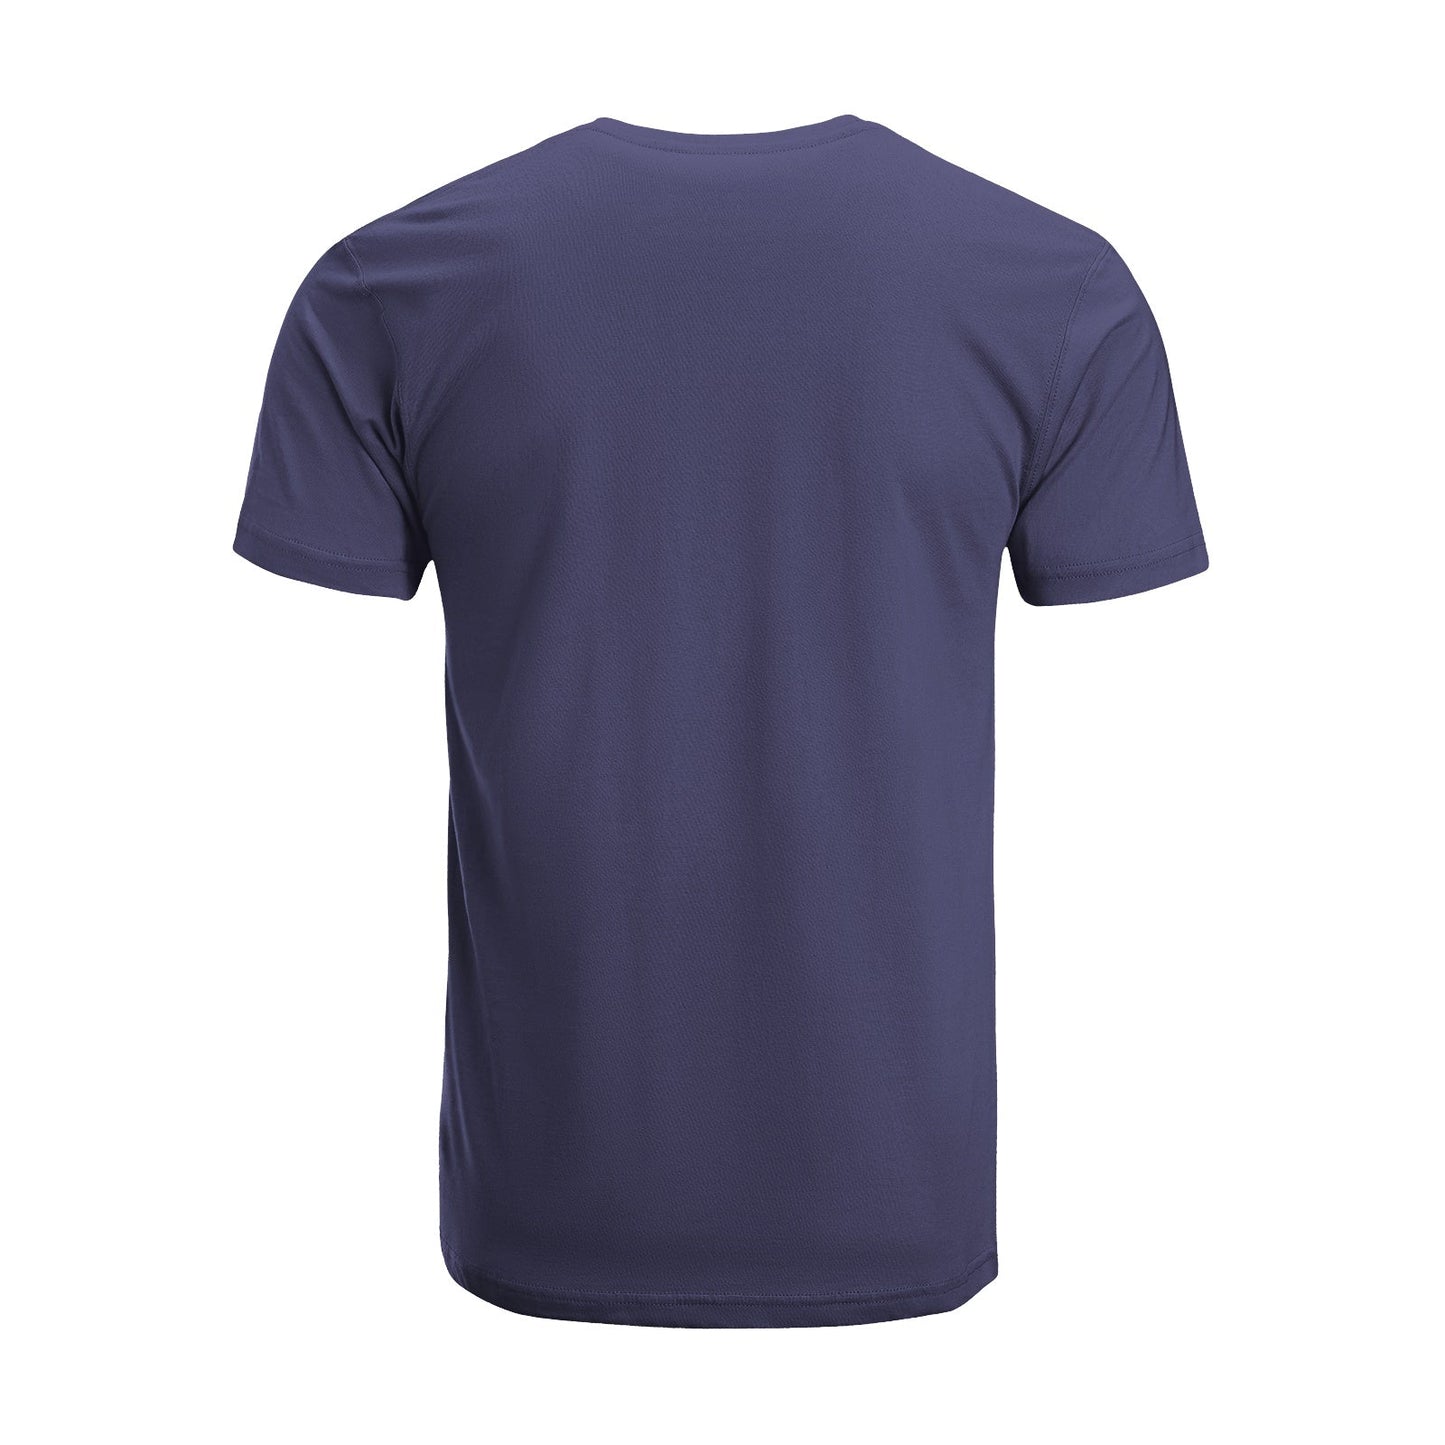 Unisex Short Sleeve Crew Neck Cotton Jersey T-Shirt Gym No. 04 - Tara-Outfits.com